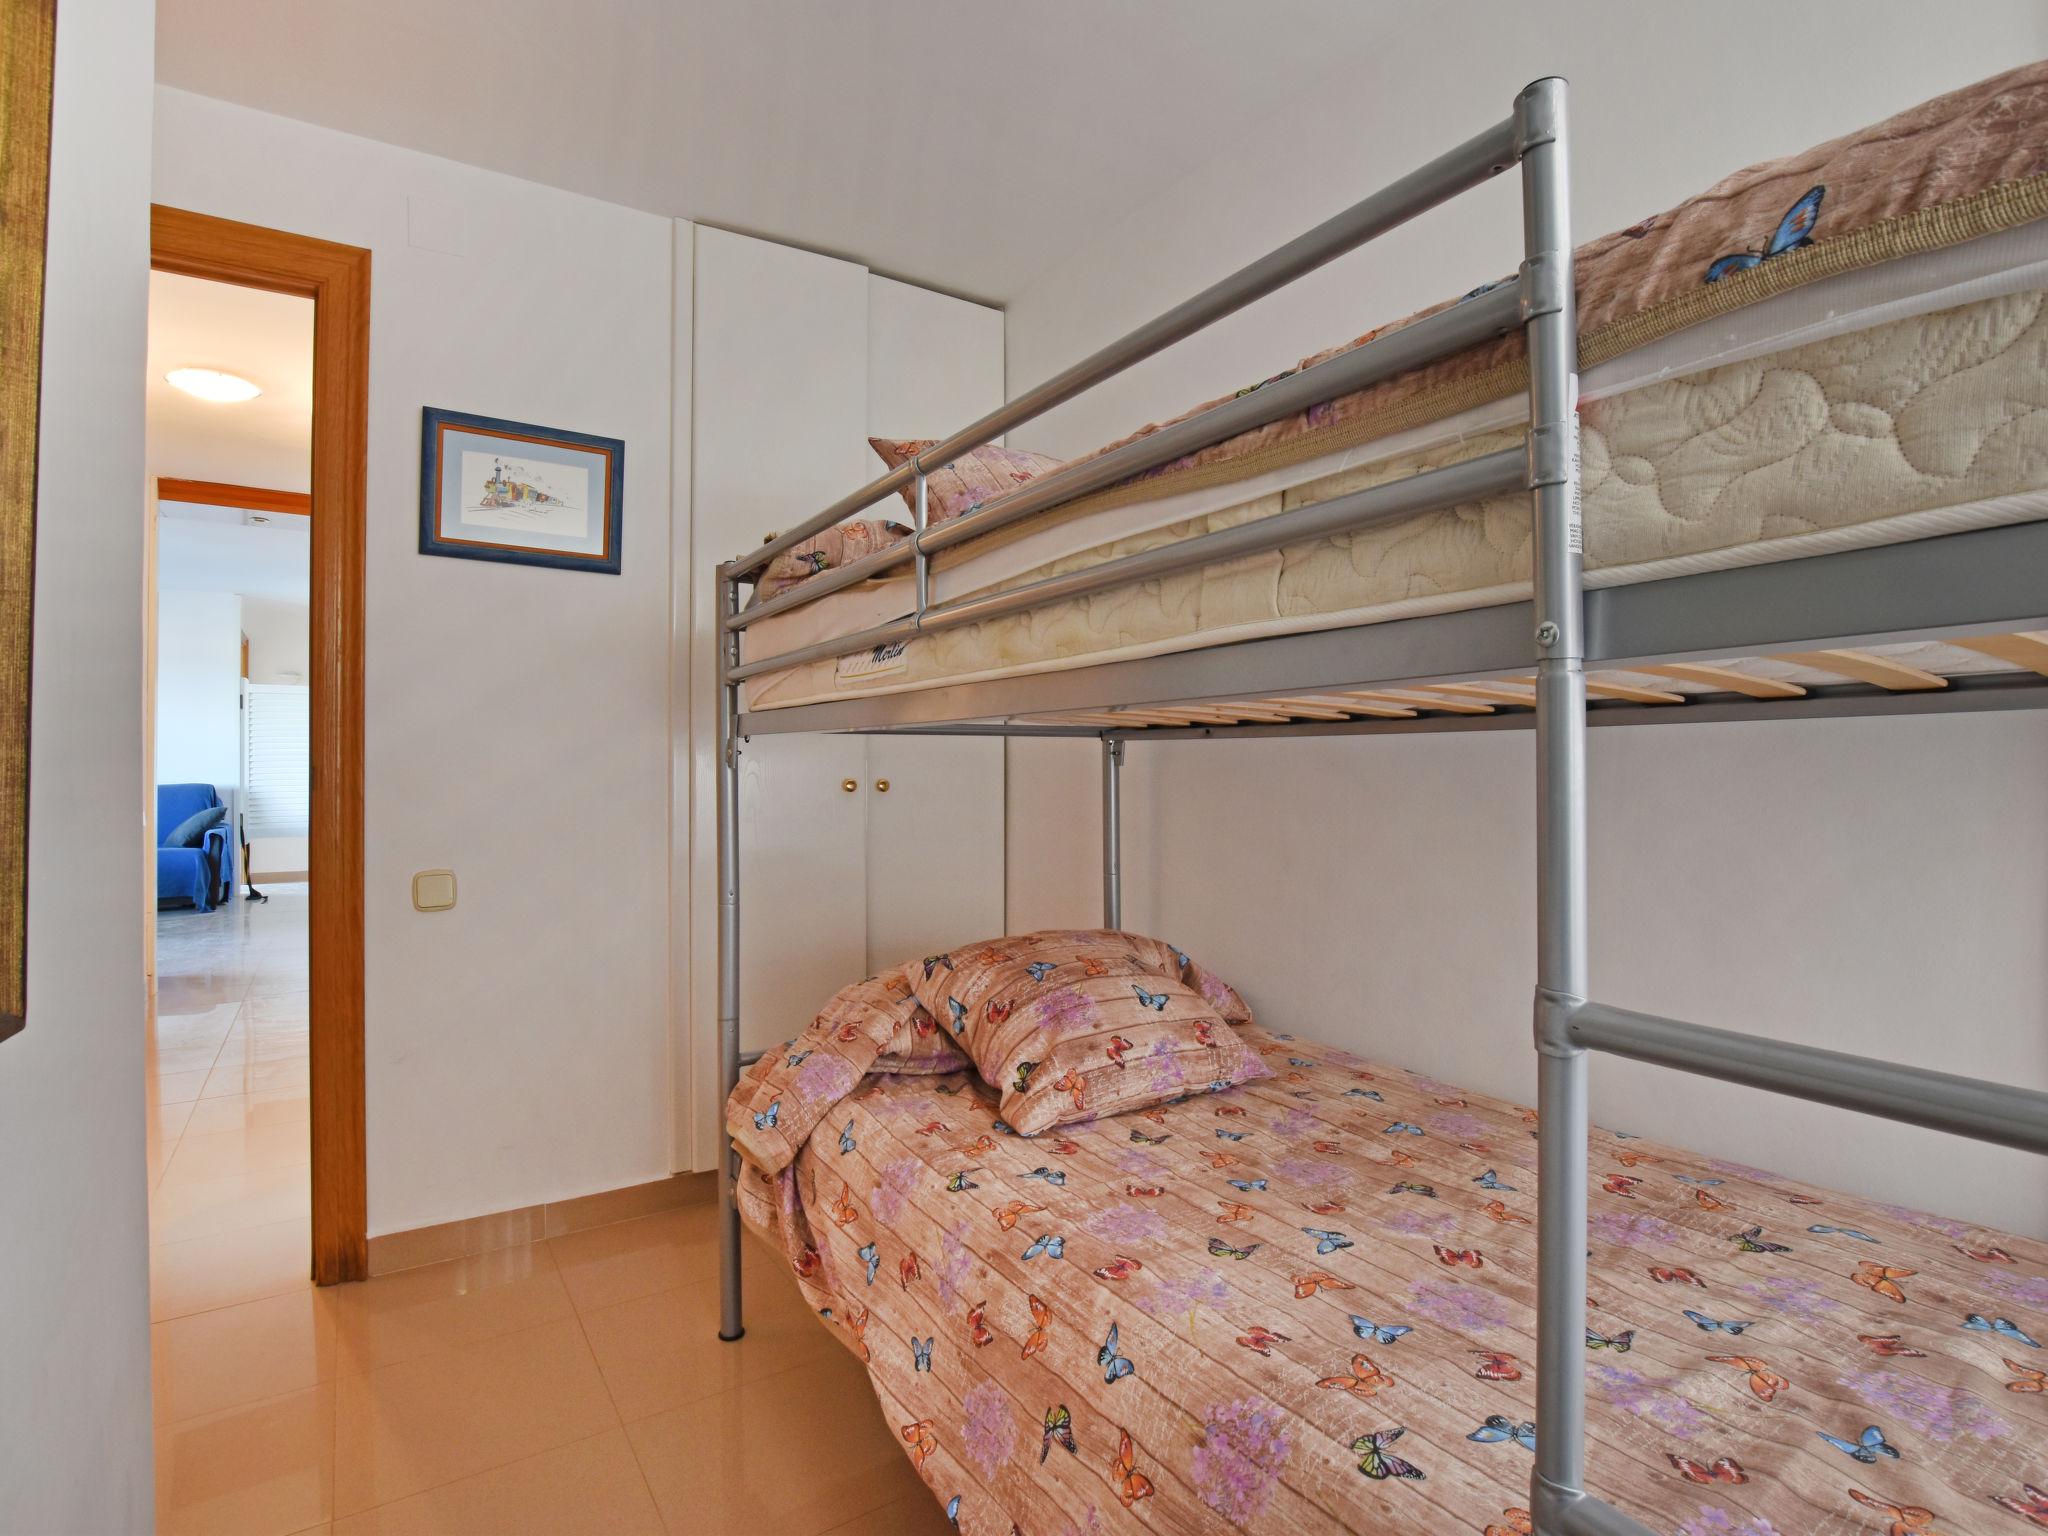 Photo 14 - Appartement de 4 chambres à Torredembarra avec terrasse et vues à la mer